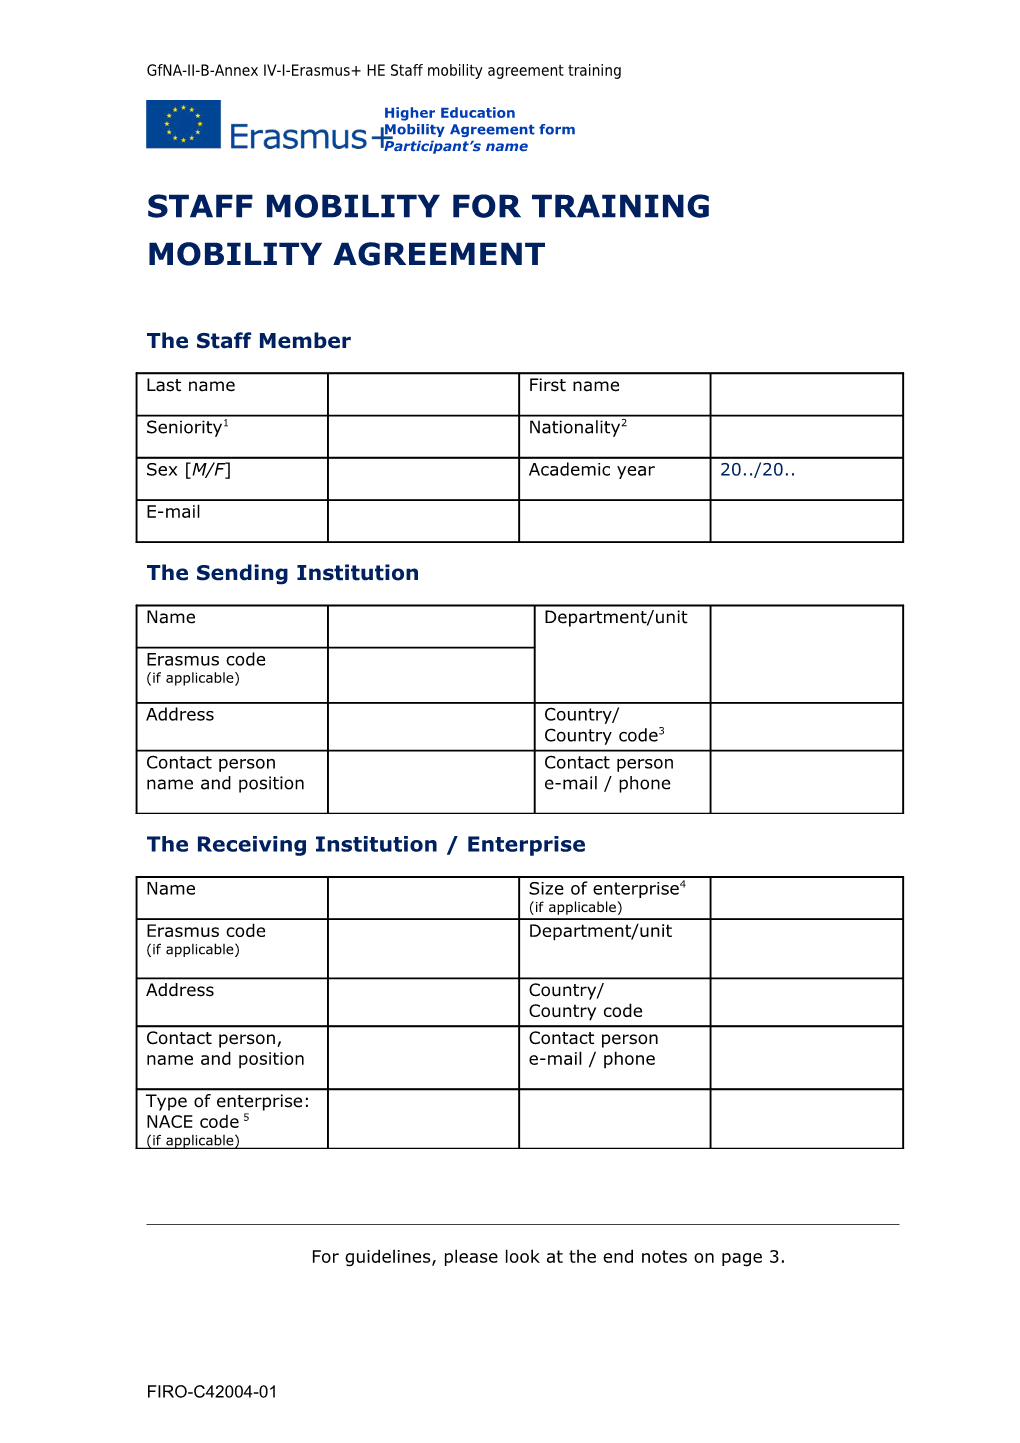 Gfna-II-B-Annex IV-I-Erasmus+ HE Staff Mobility Agreement Training